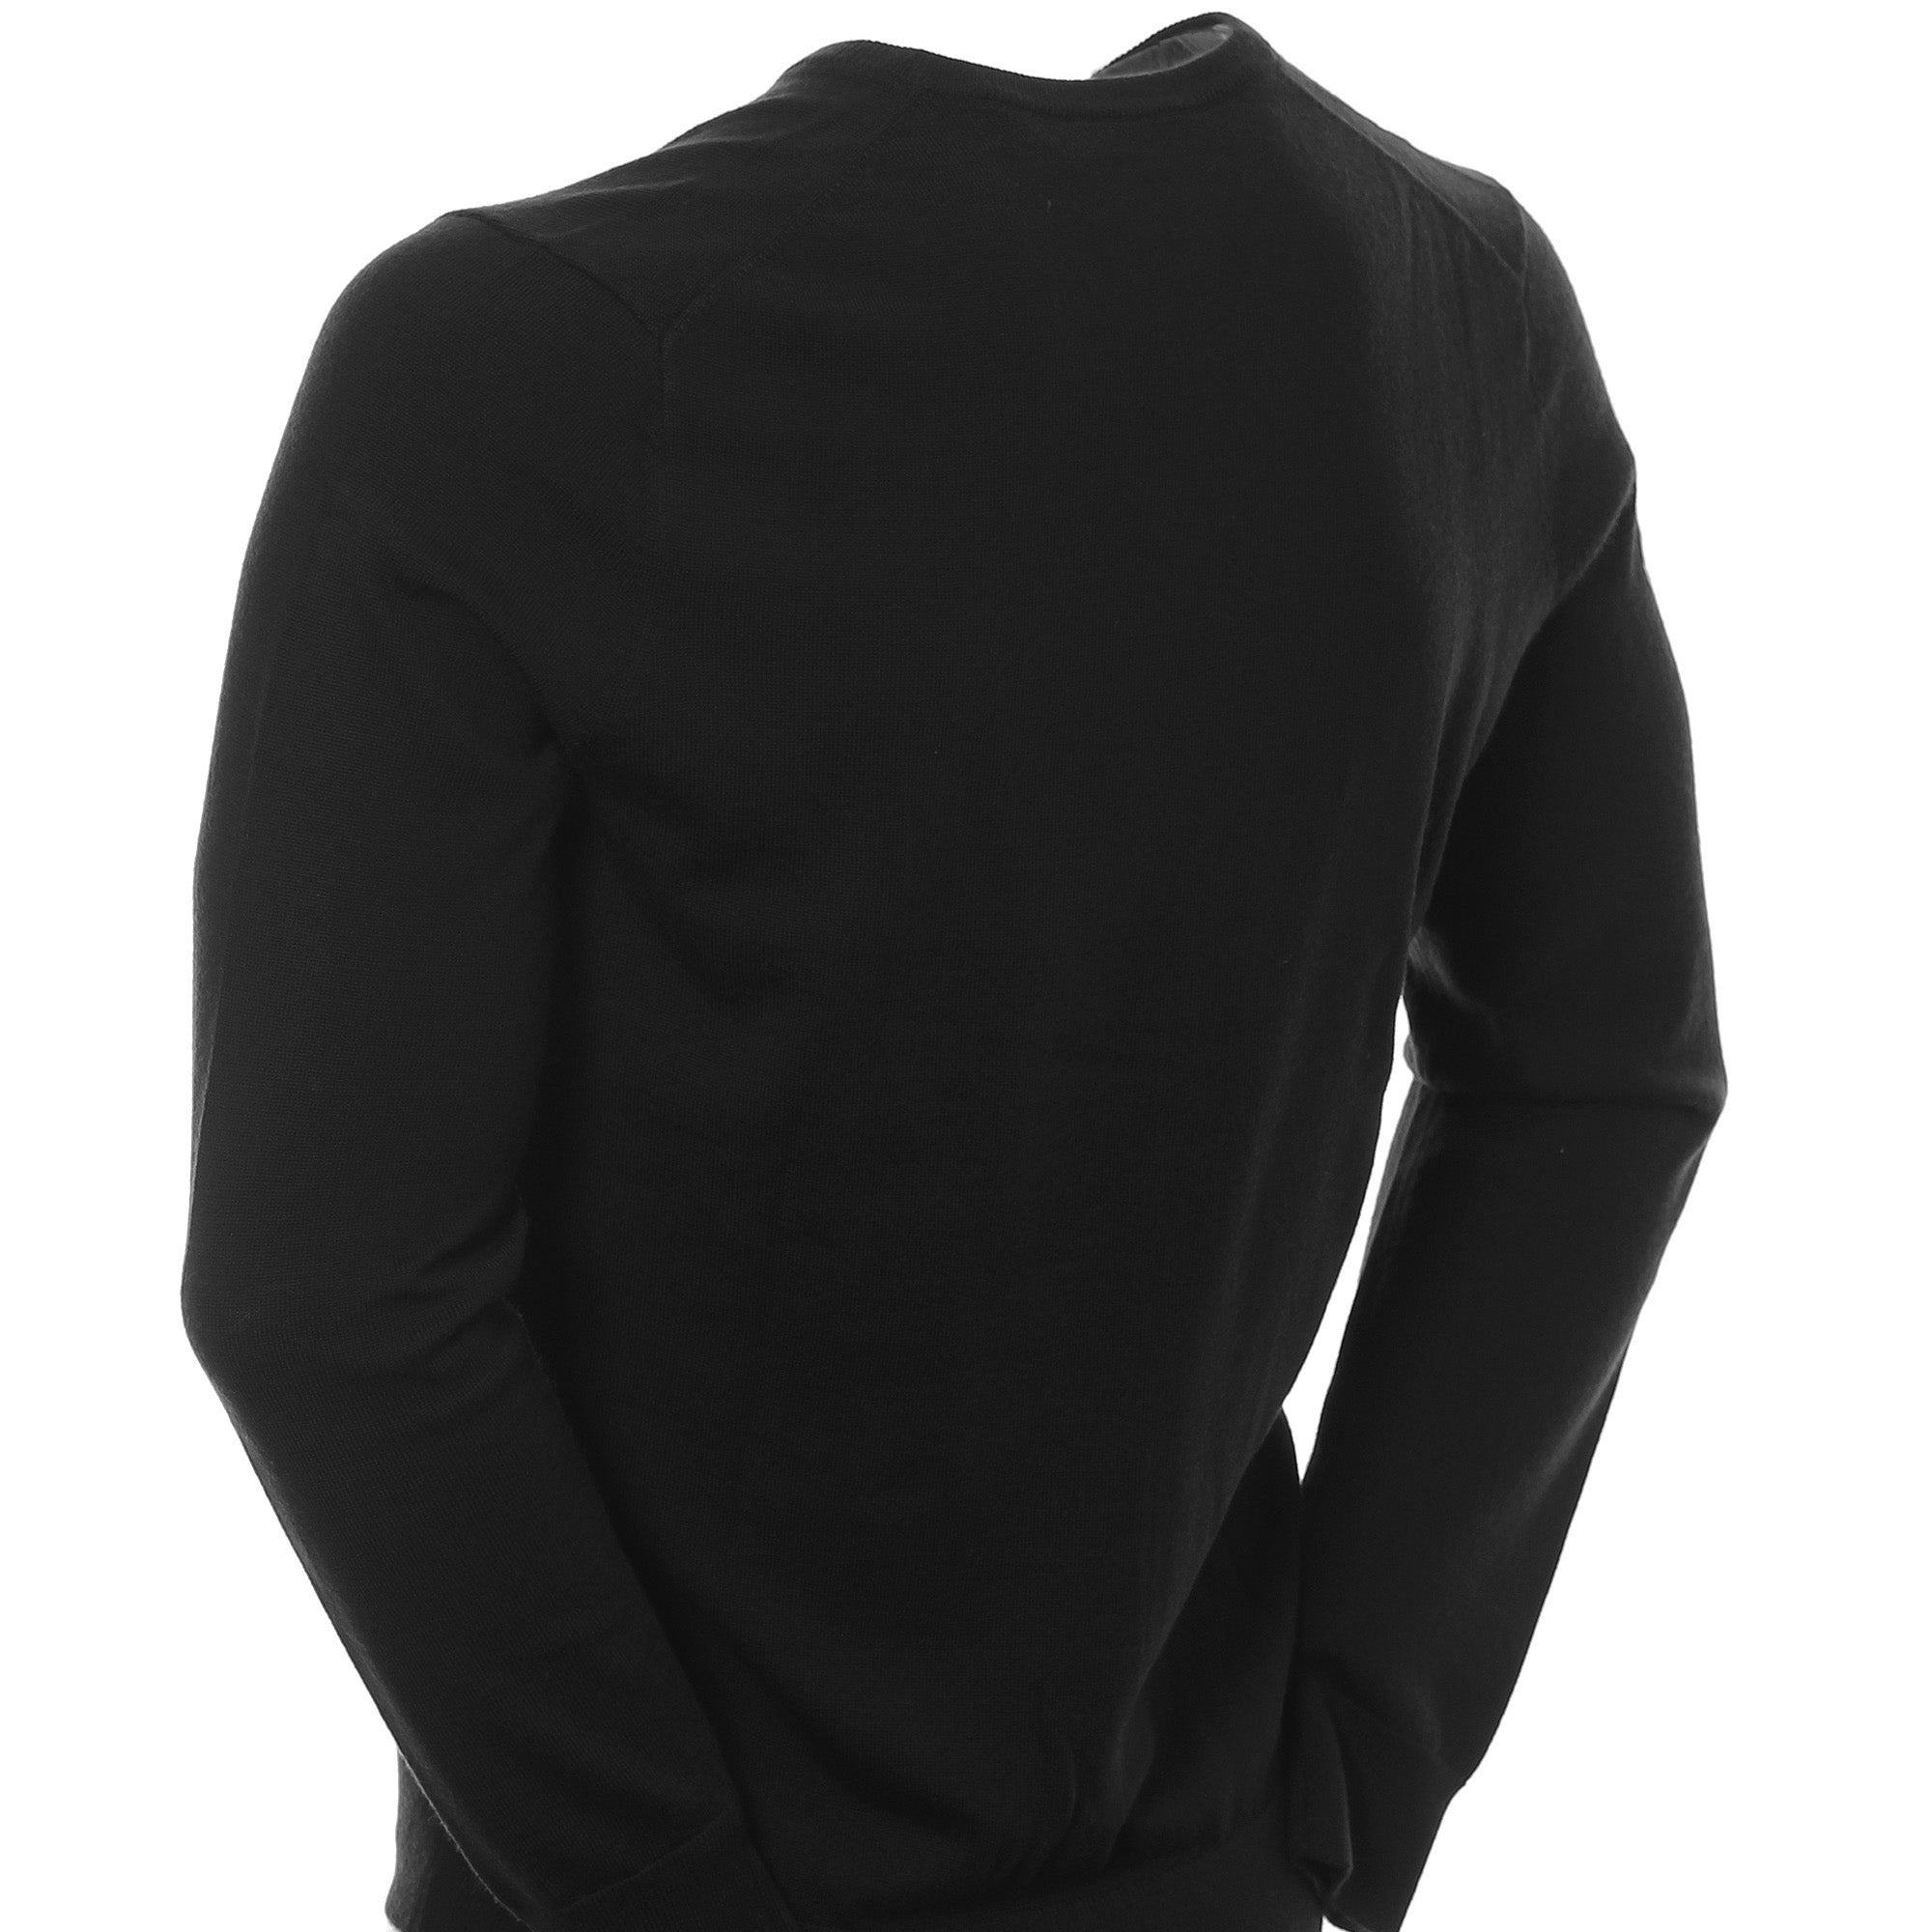 callaway-golf-ribbed-merino-v-neck-sweater-cggs80z2-black-onyx